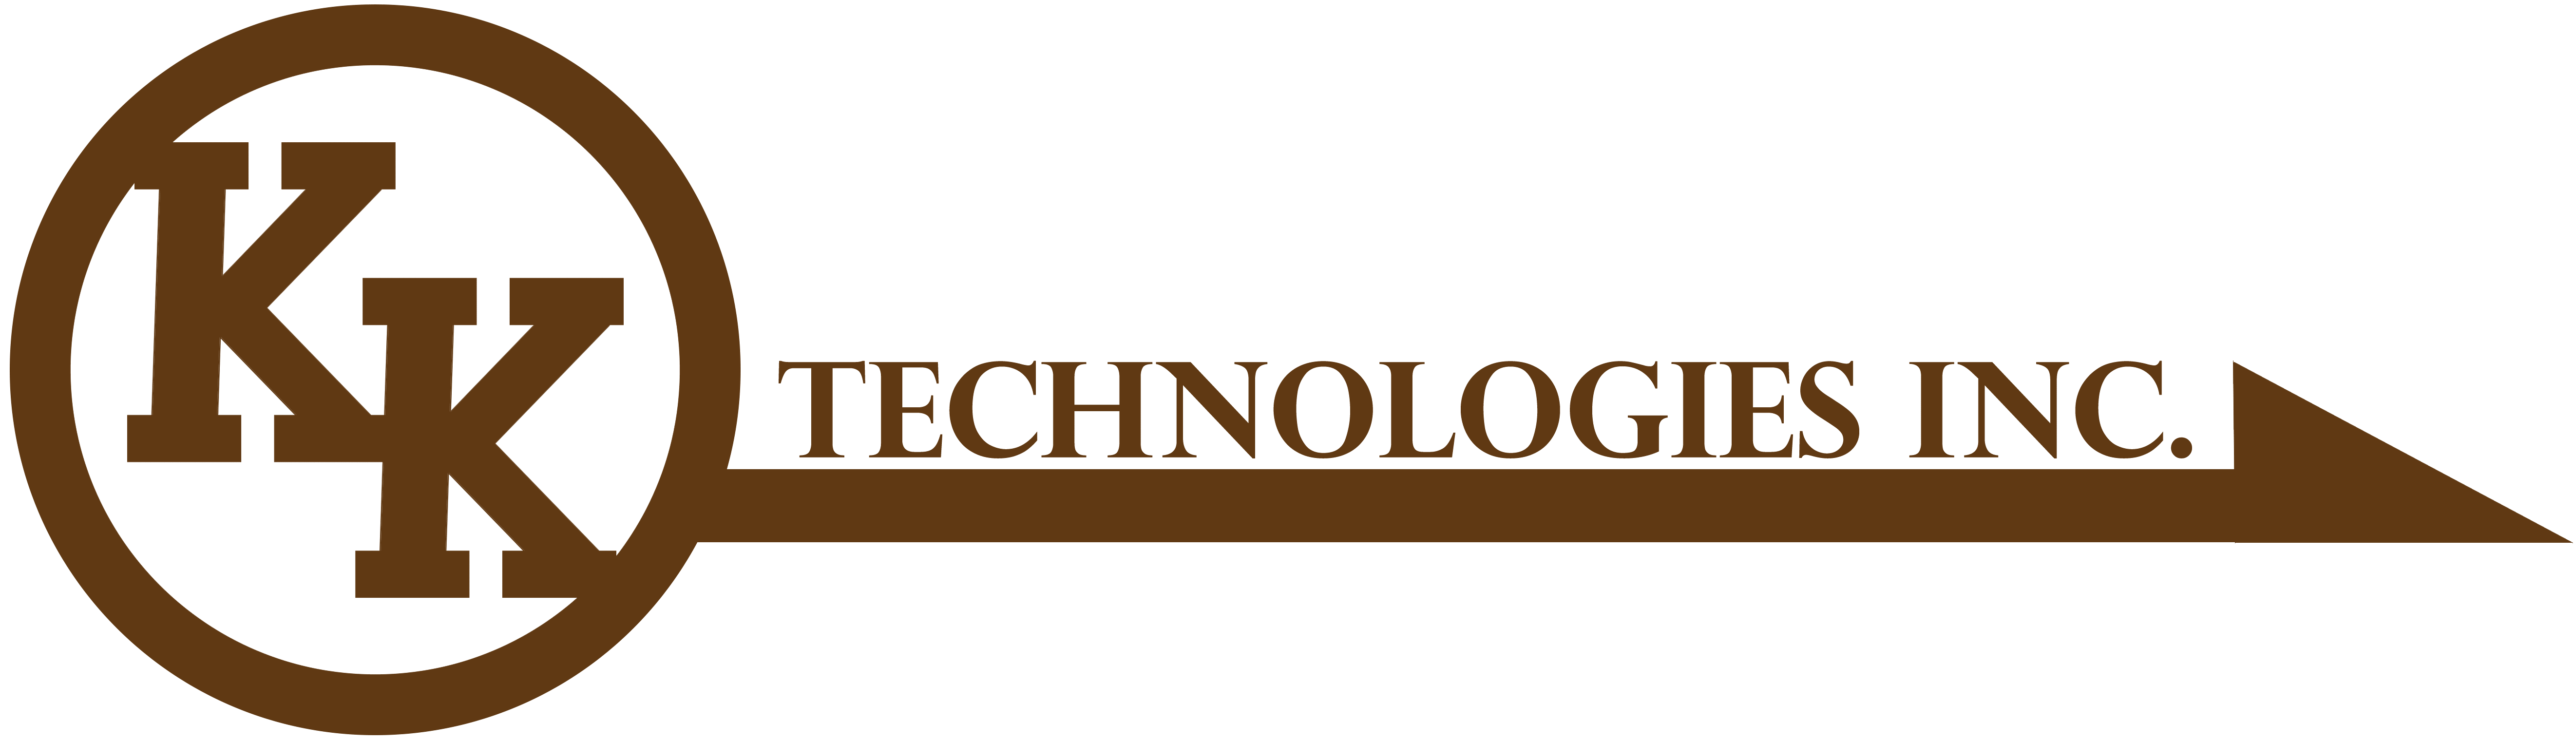 KK Technologies Inc.